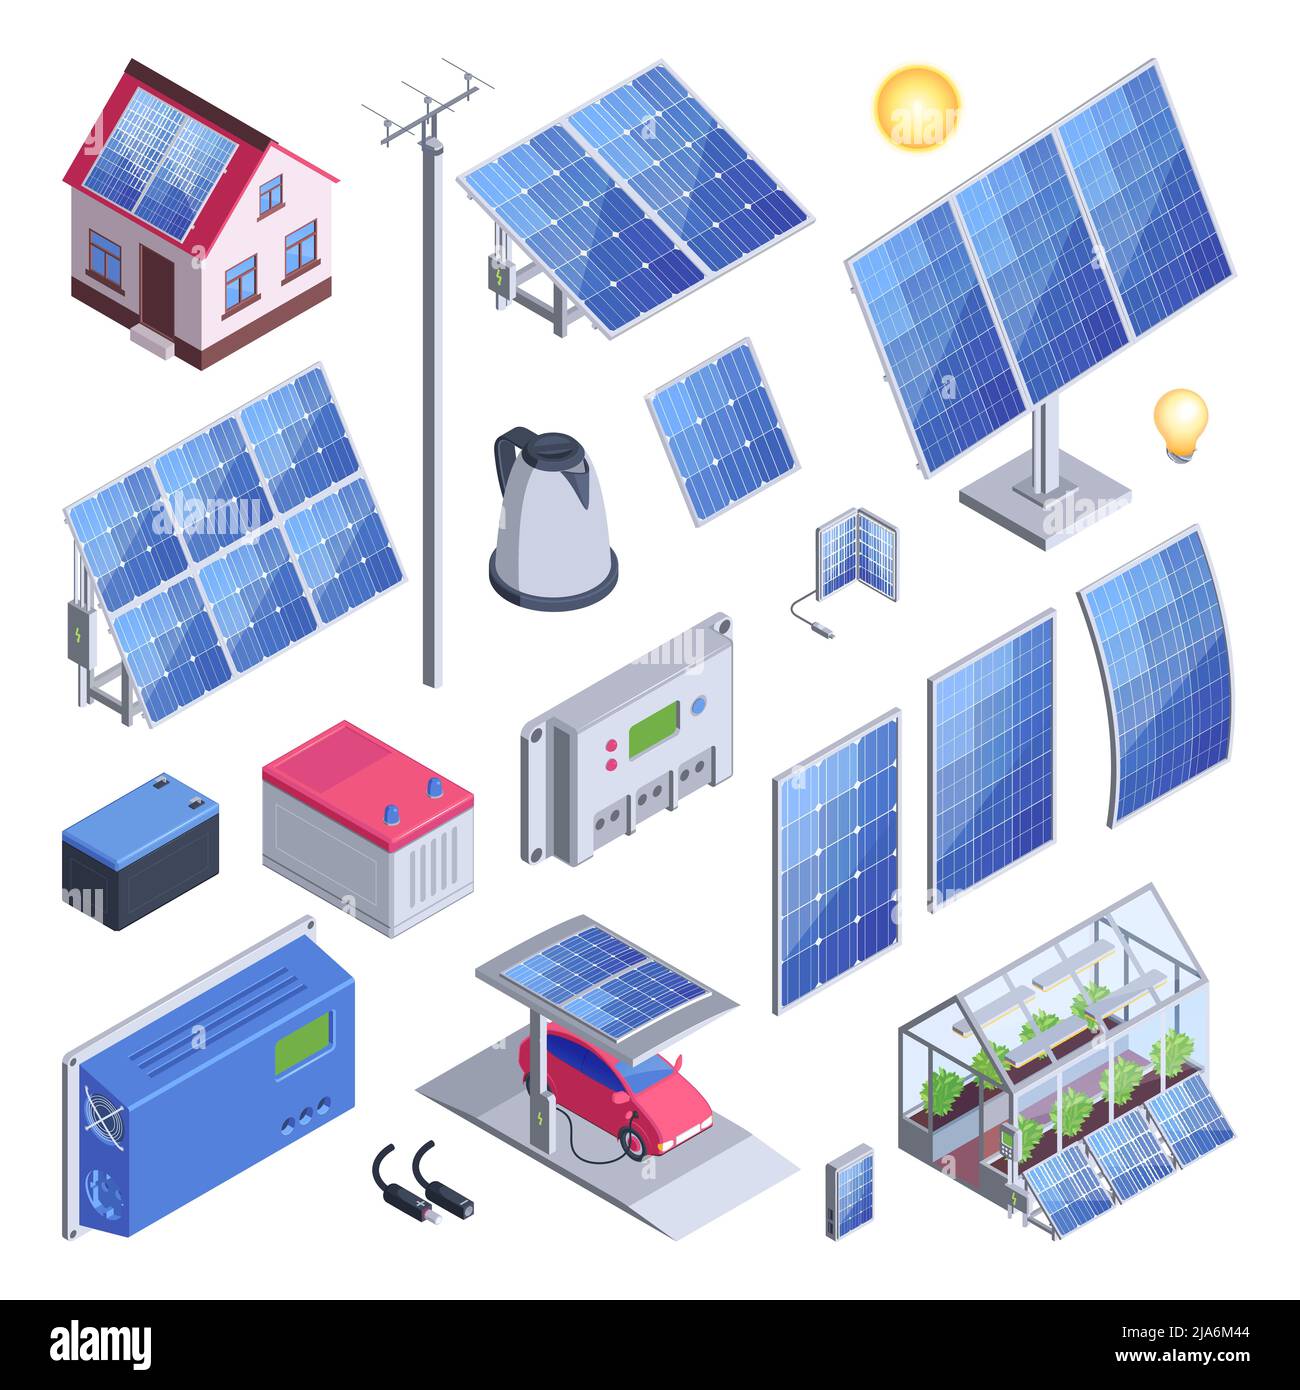 Energía solar color conjunto de eco hogar e invernadero con paneles solares  contador controlador coche eléctrico iconos aislados ilustración vectorial  Imagen Vector de stock - Alamy